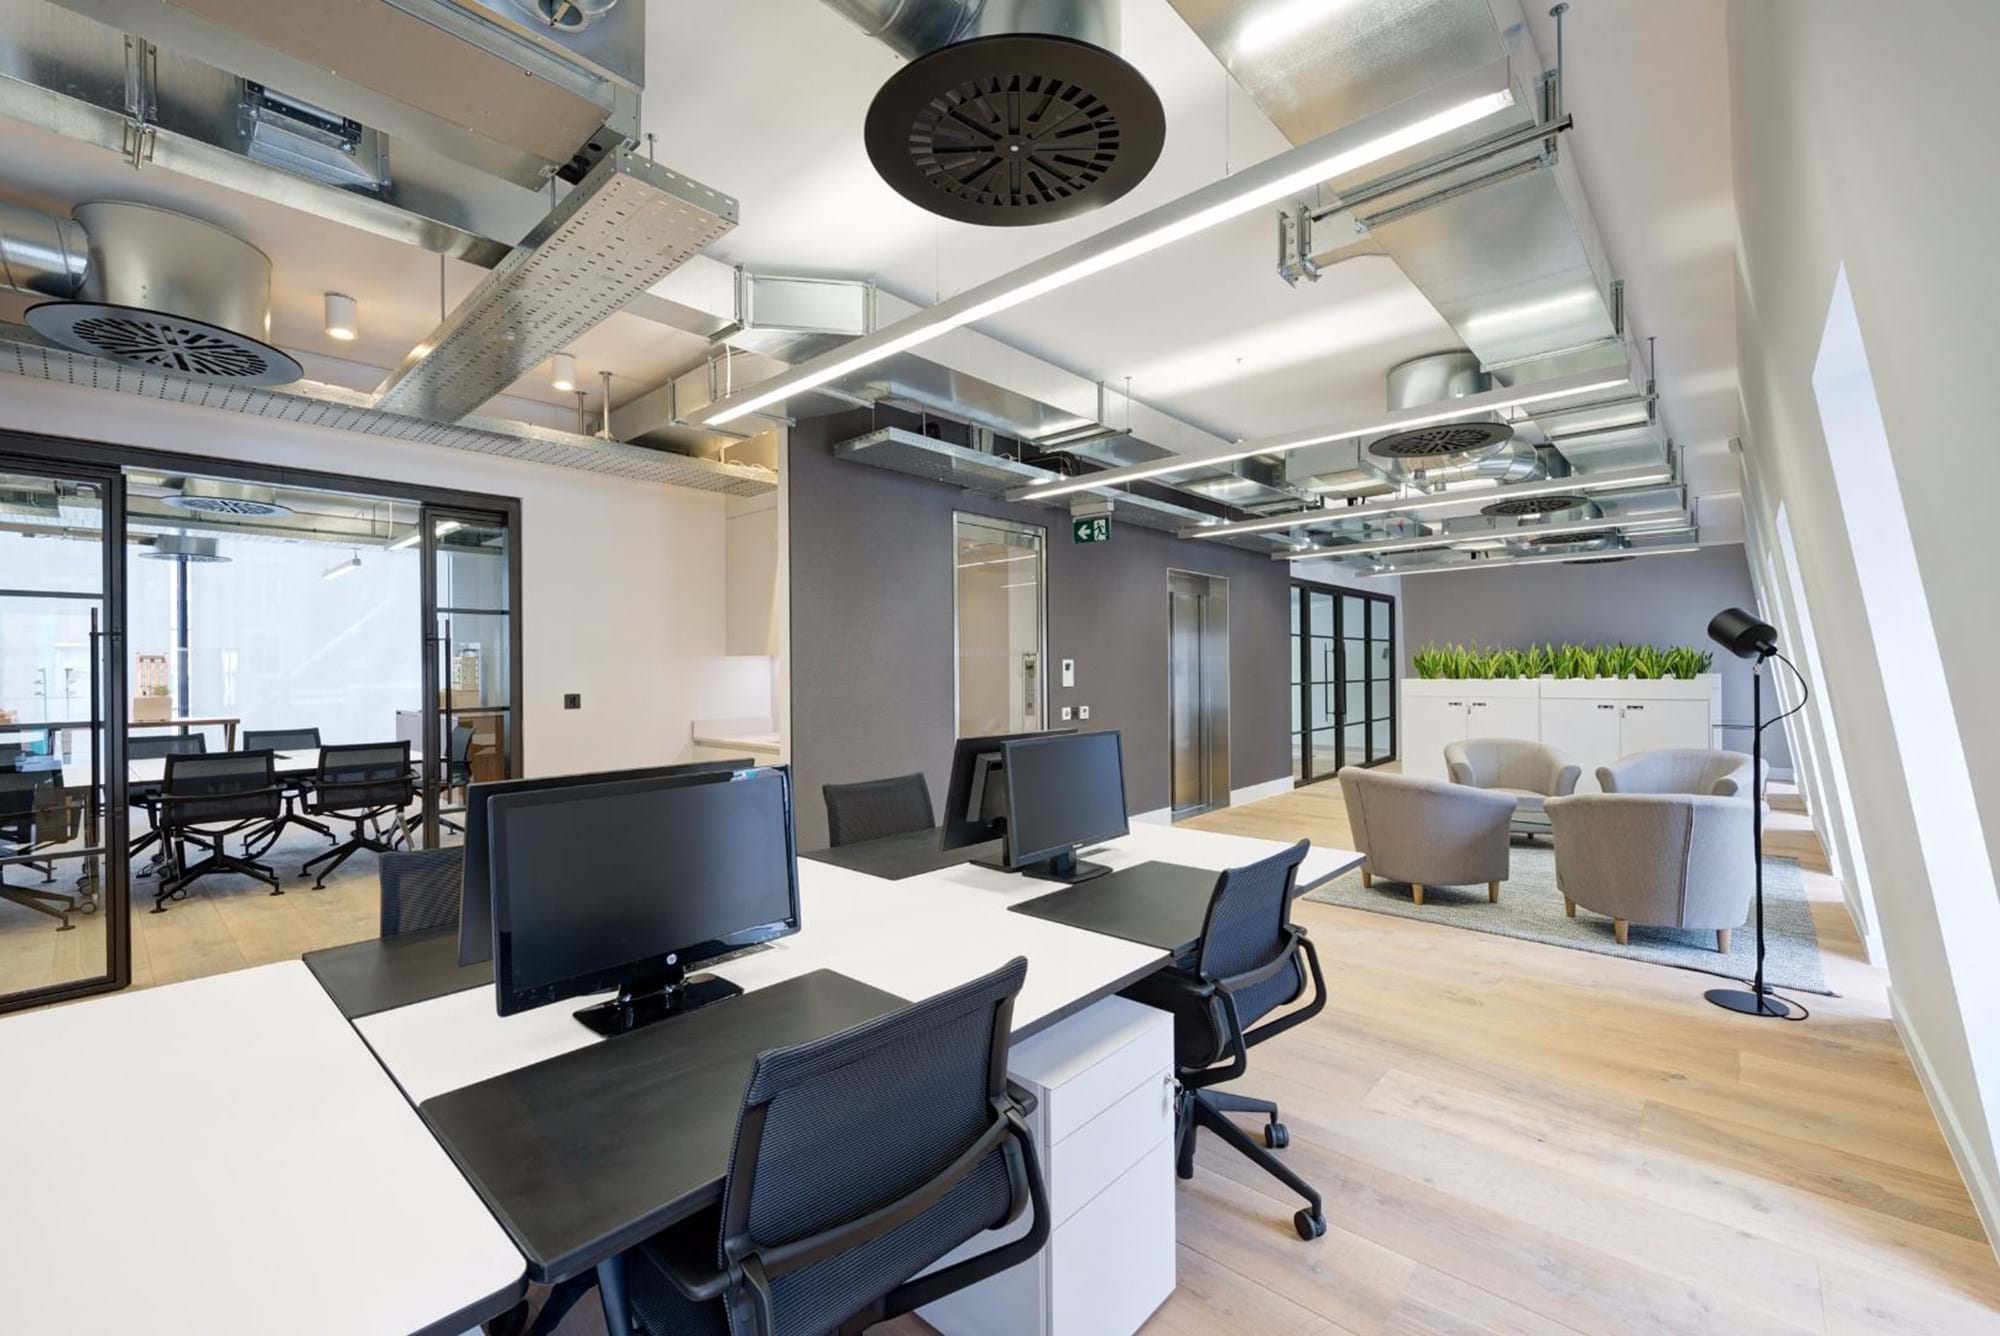 Modus Workspace office design, fit out and refurbishment - Craigewan - Graigewan 12 highres sRGB.jpg